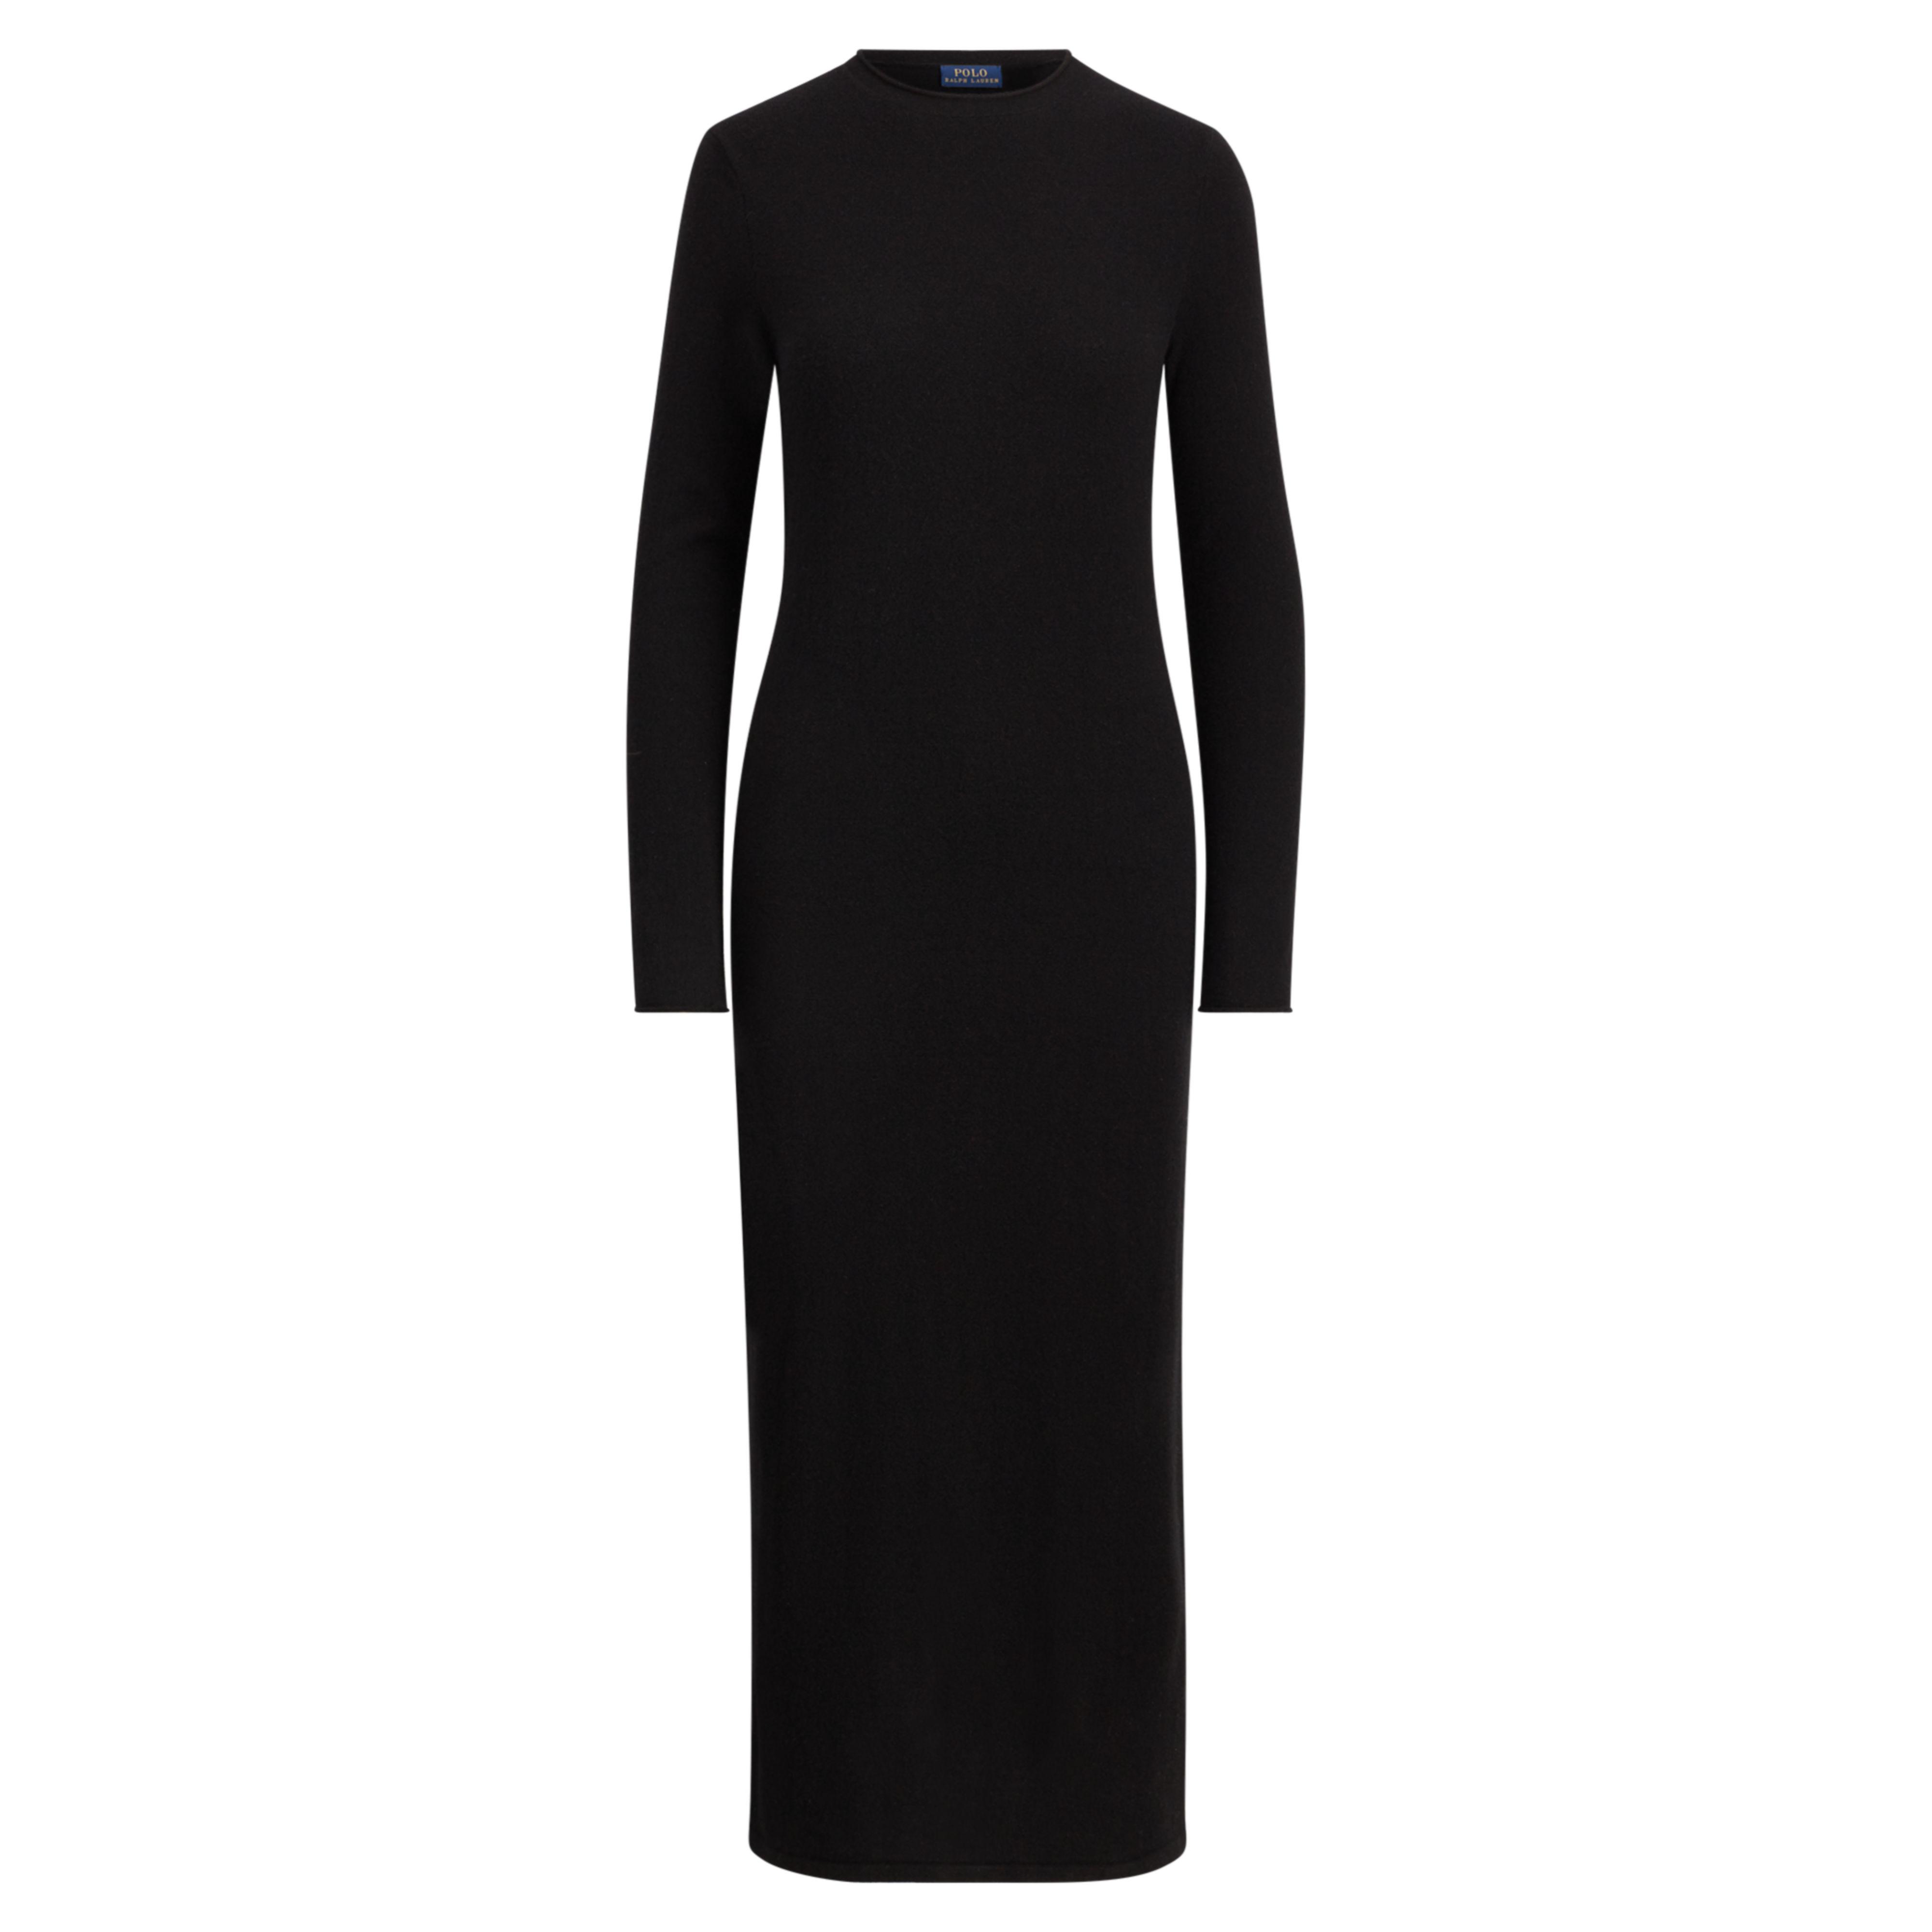 Polo Ralph Lauren Cashmere Midi Dress in Black - Lyst